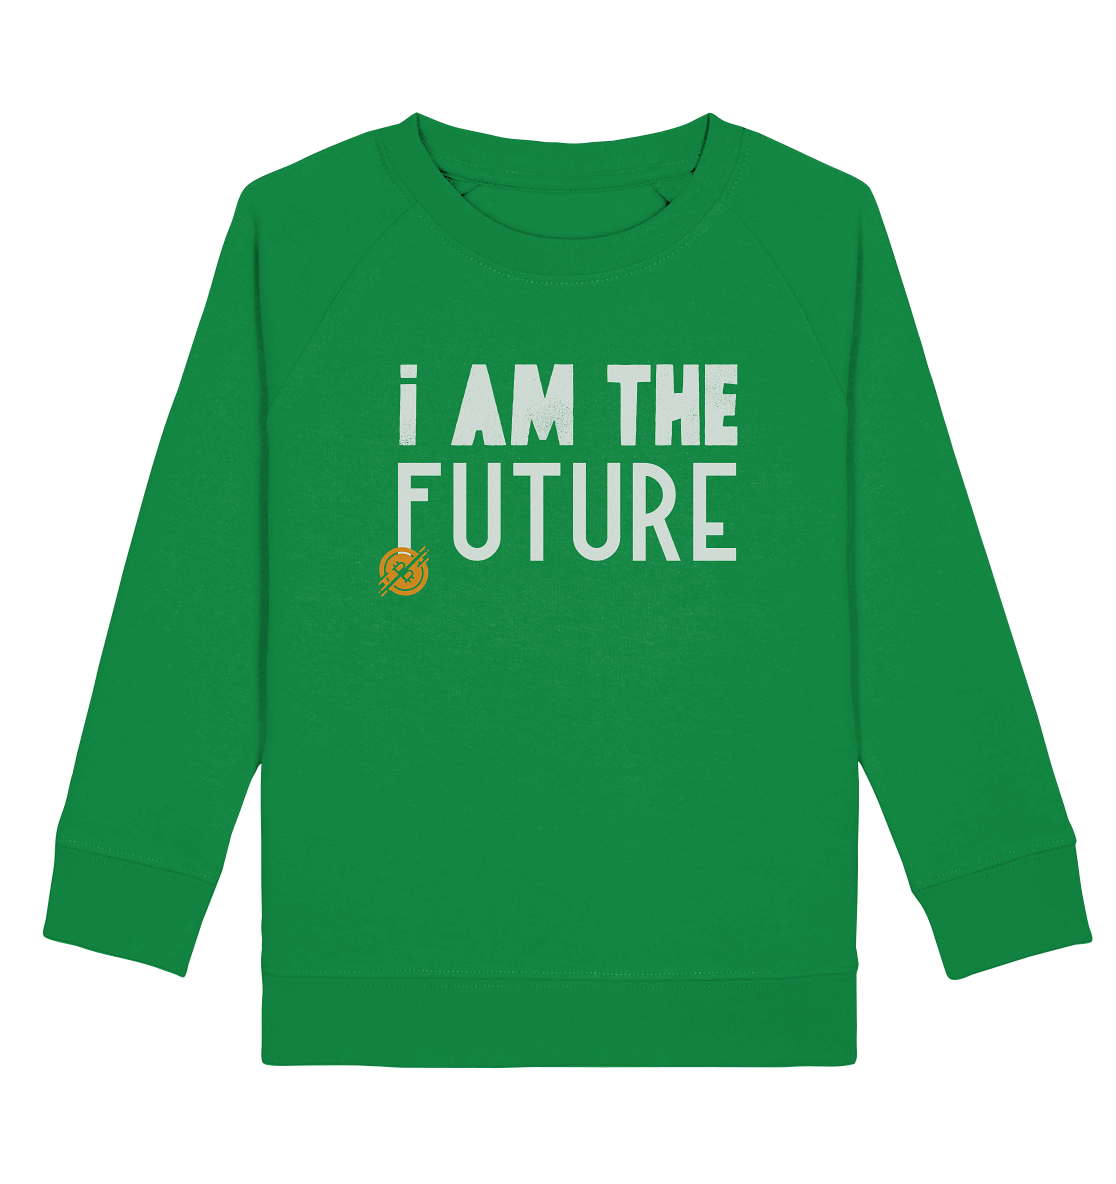 Bitcoin "I am the future" - Kids Organic Sweatshirt